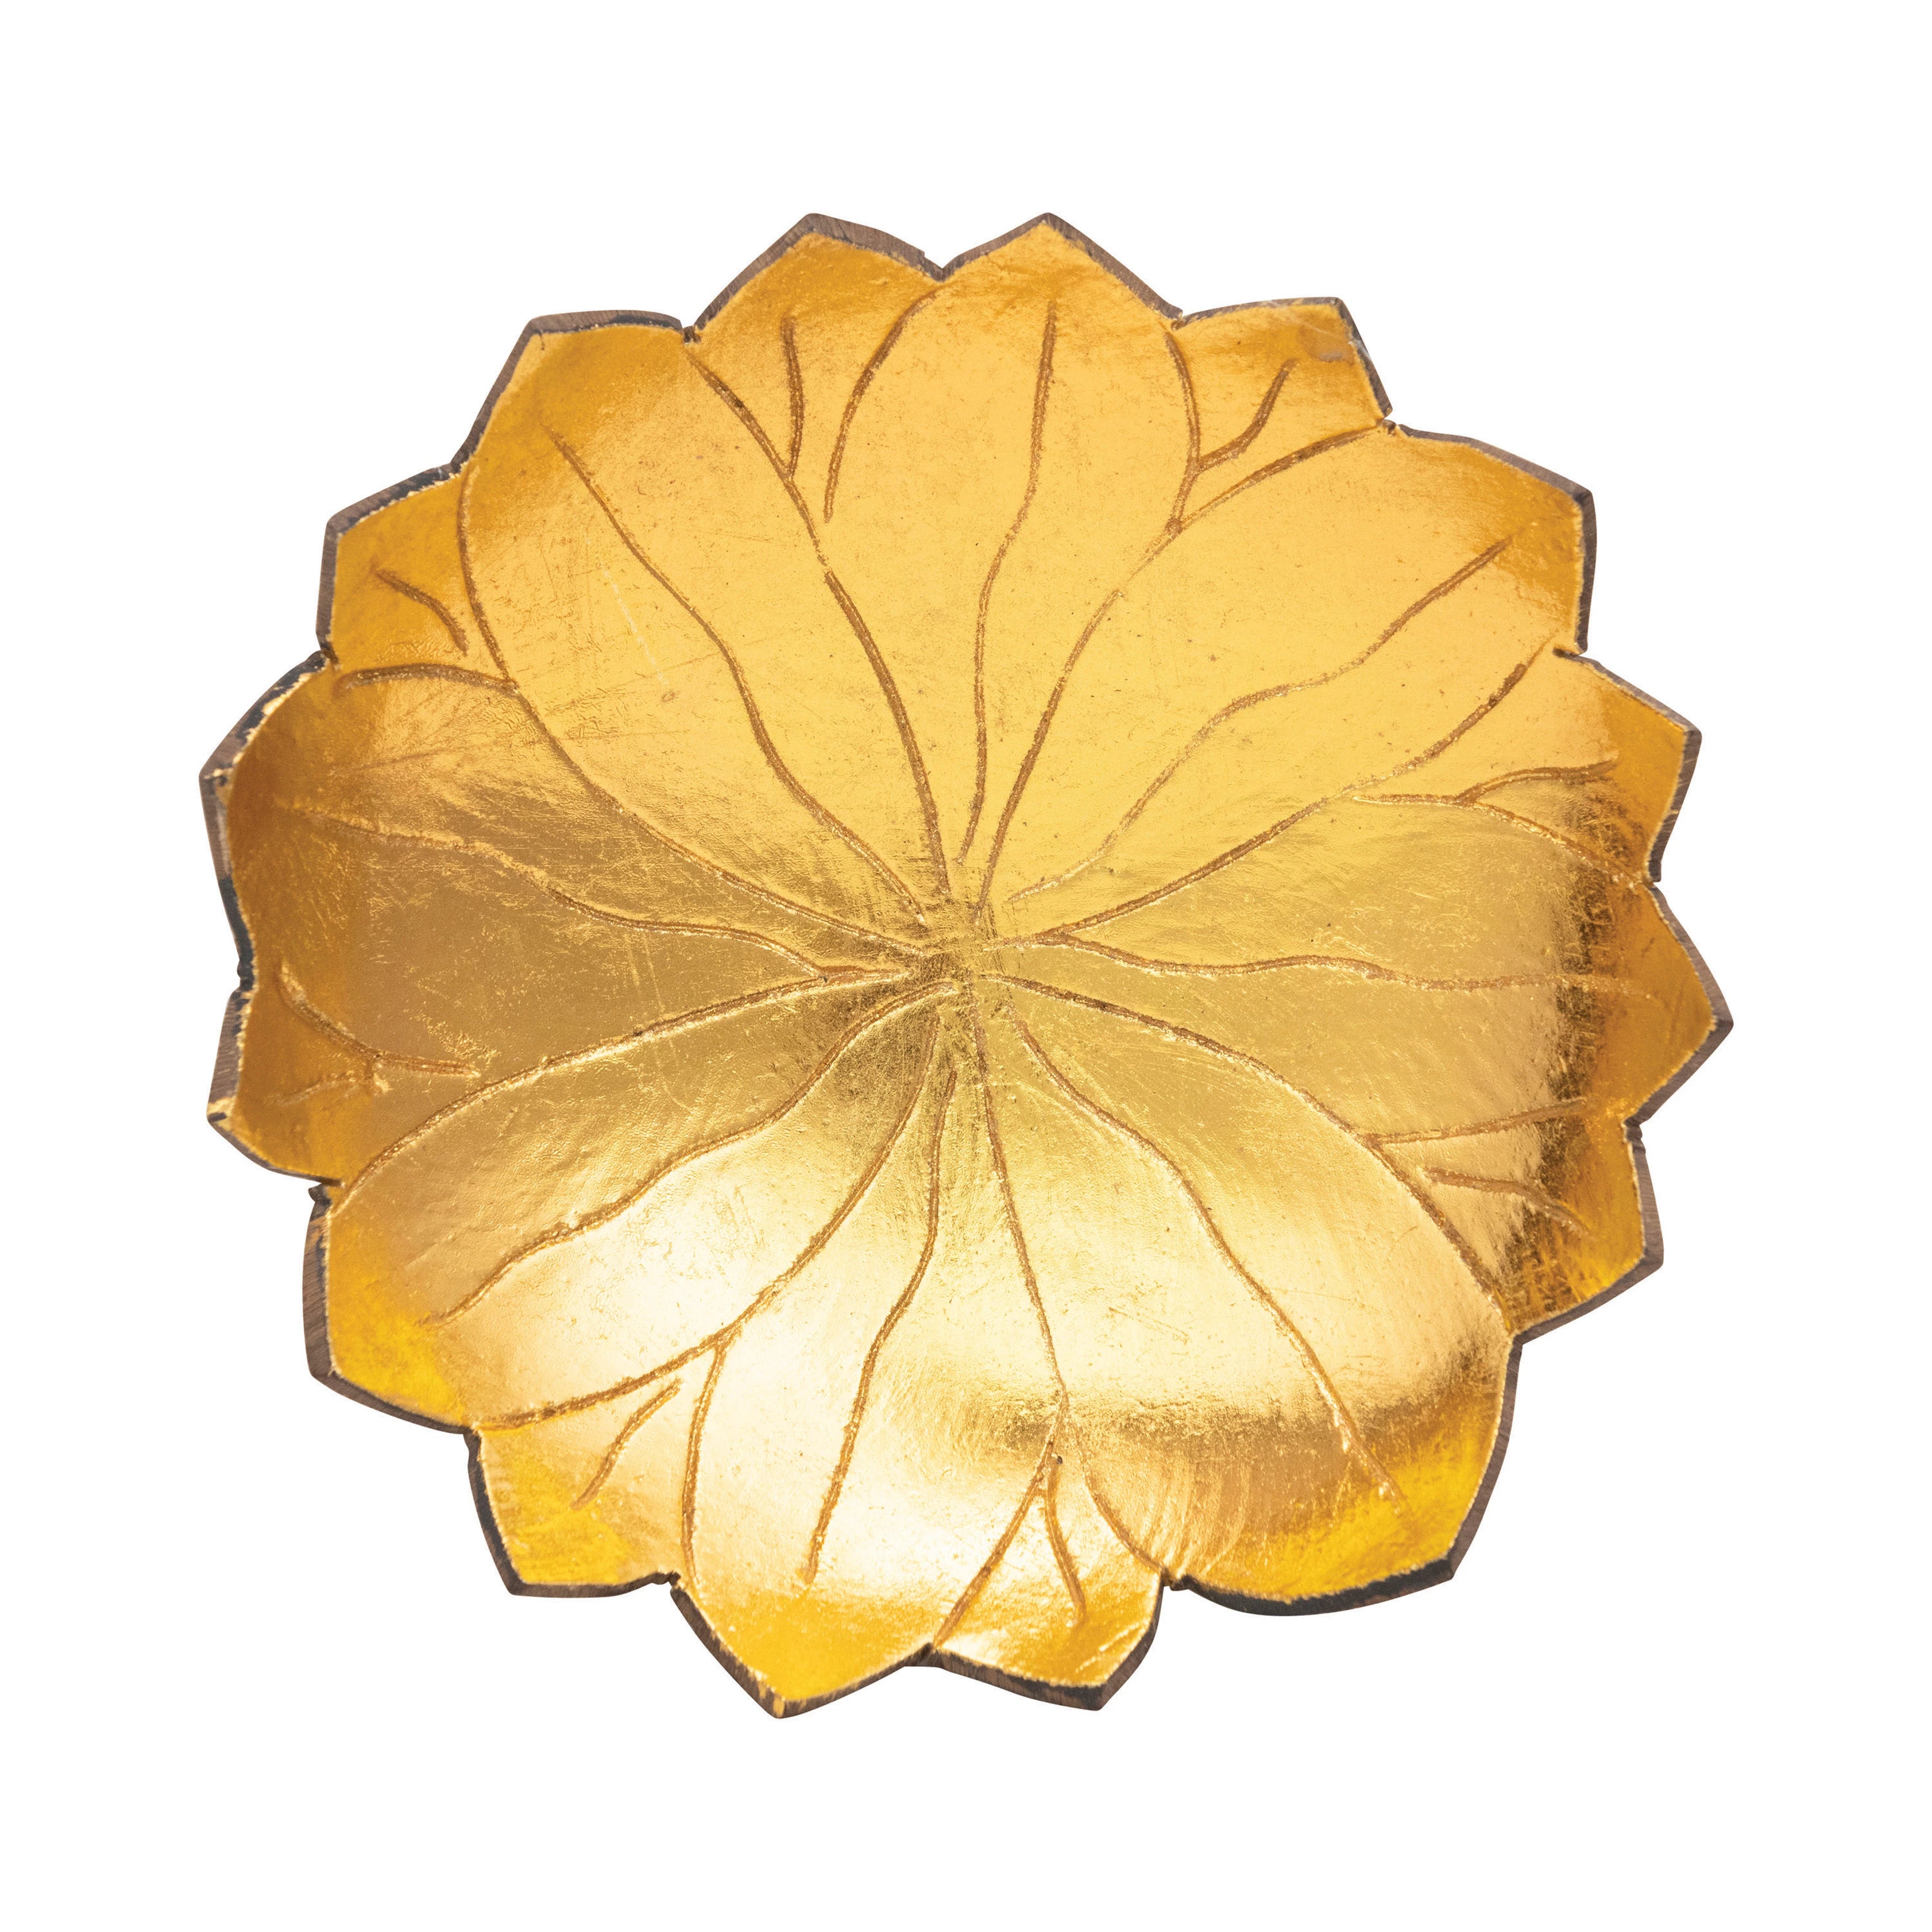 Bowl Decorative Coconut Shell Lotus-Shaped